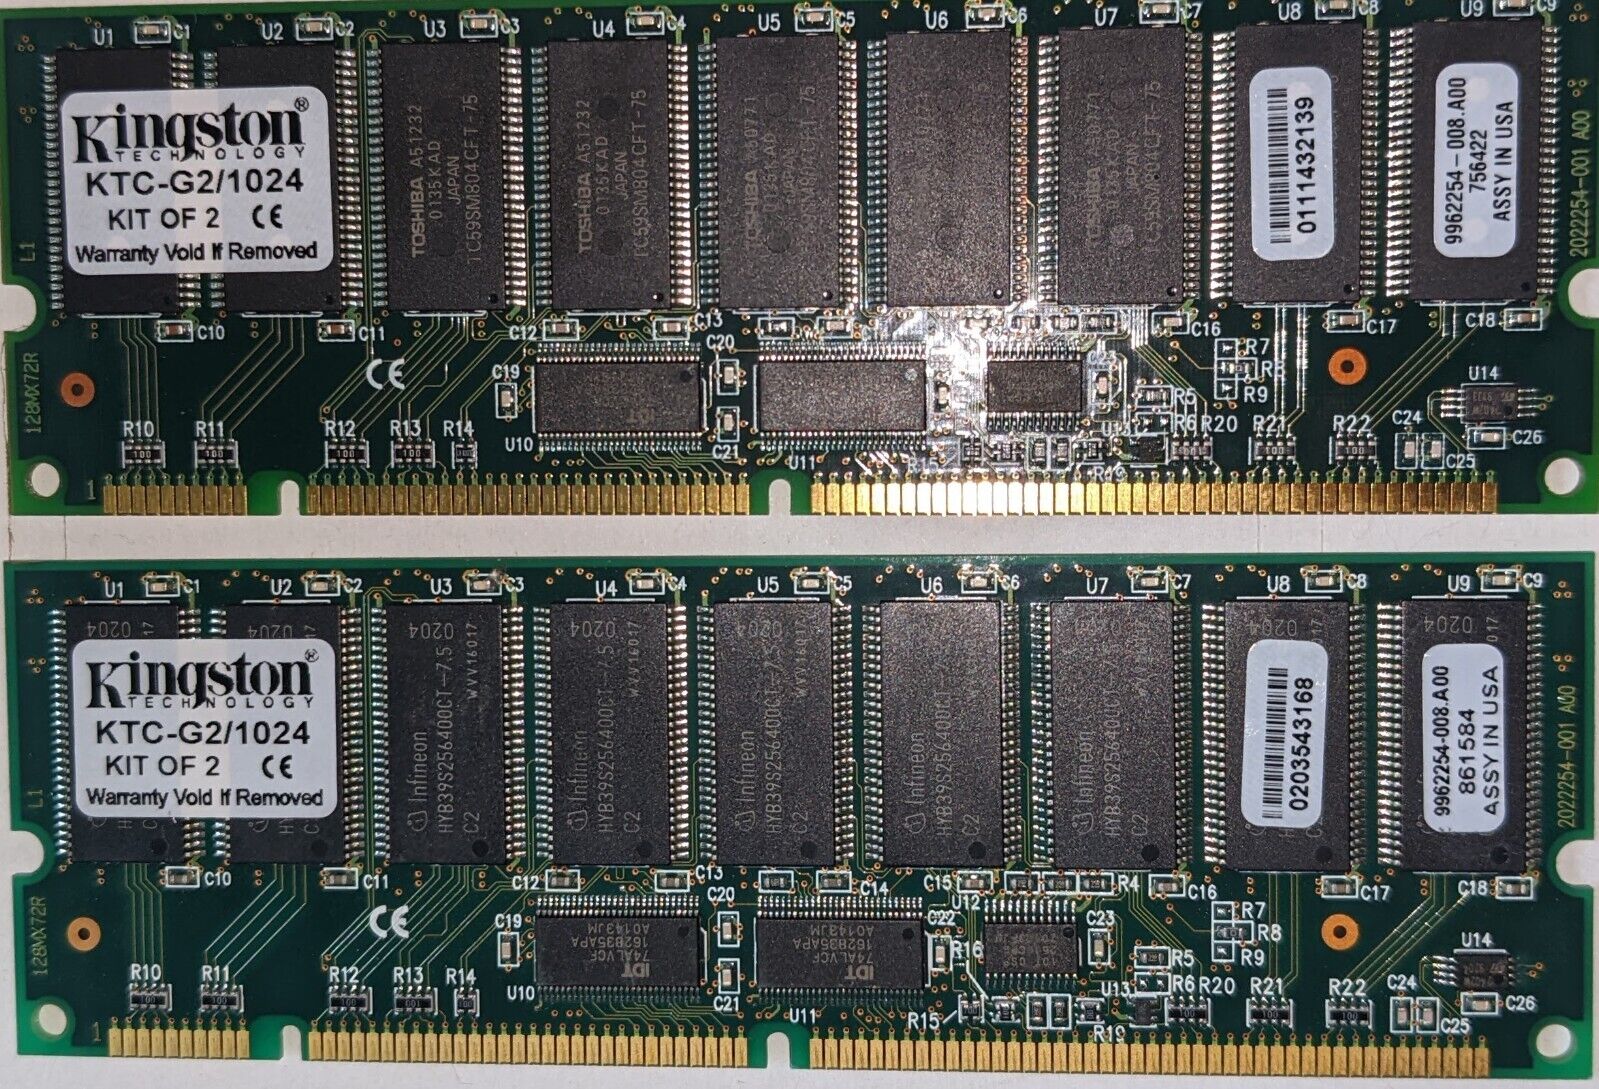 Kingston KTC-G2/1024 1024MB Server Memory Kit (210694-B21)